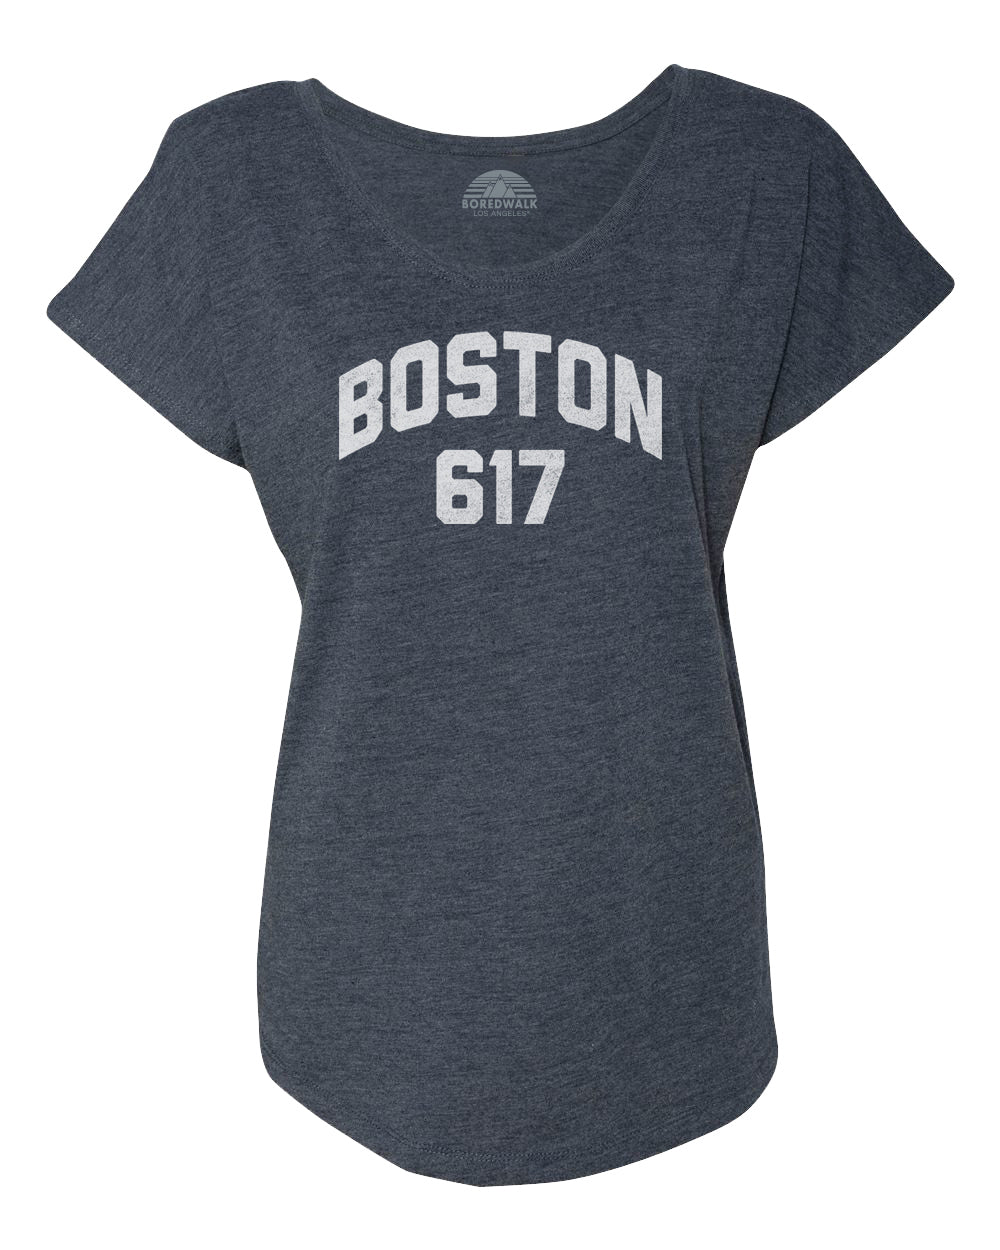 Women's Boston 617 Area Code Scoop Neck T-Shirt